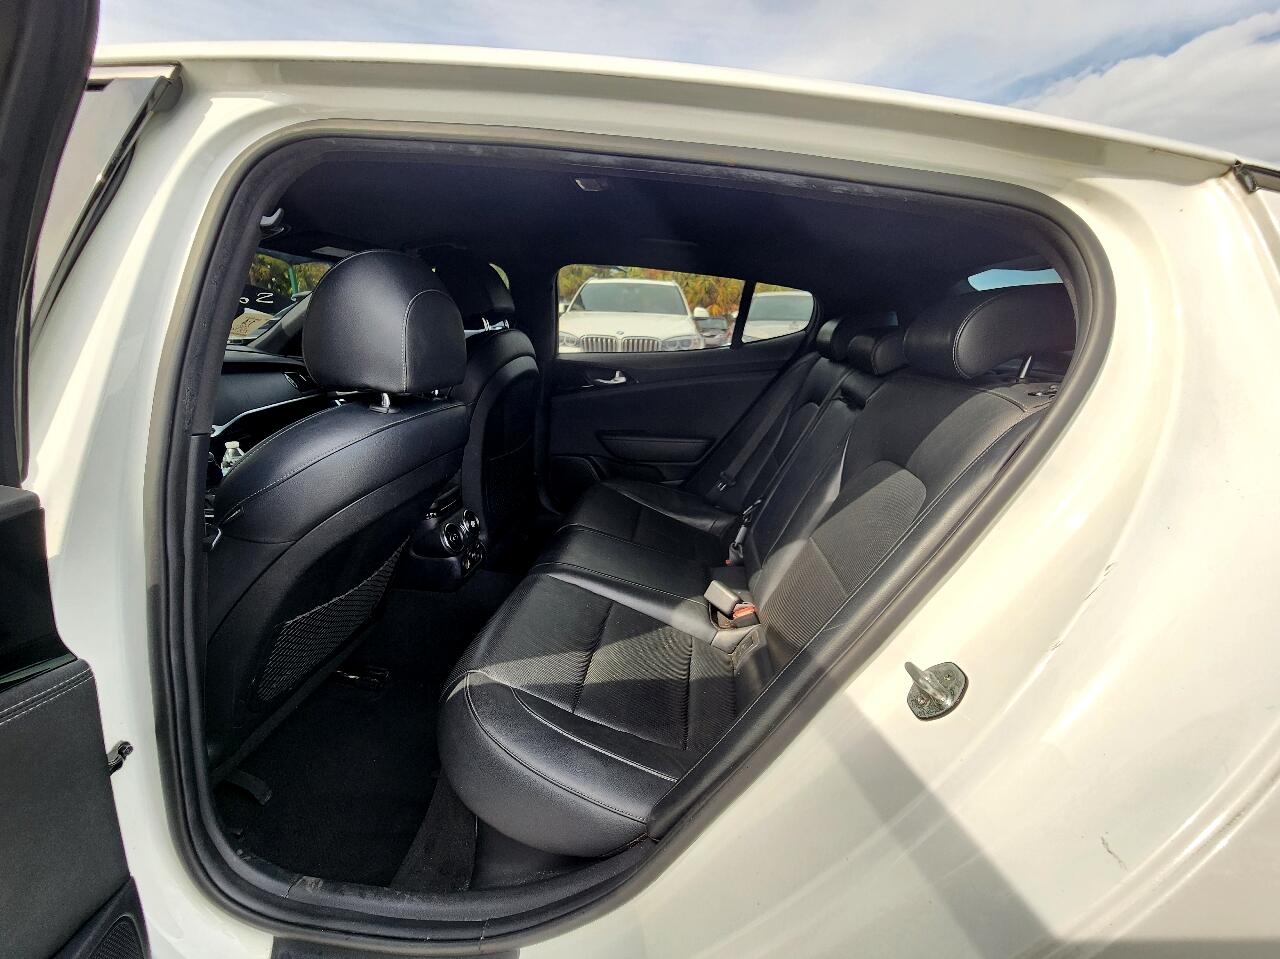 2021 KIA Stinger Hatchback - $23,999